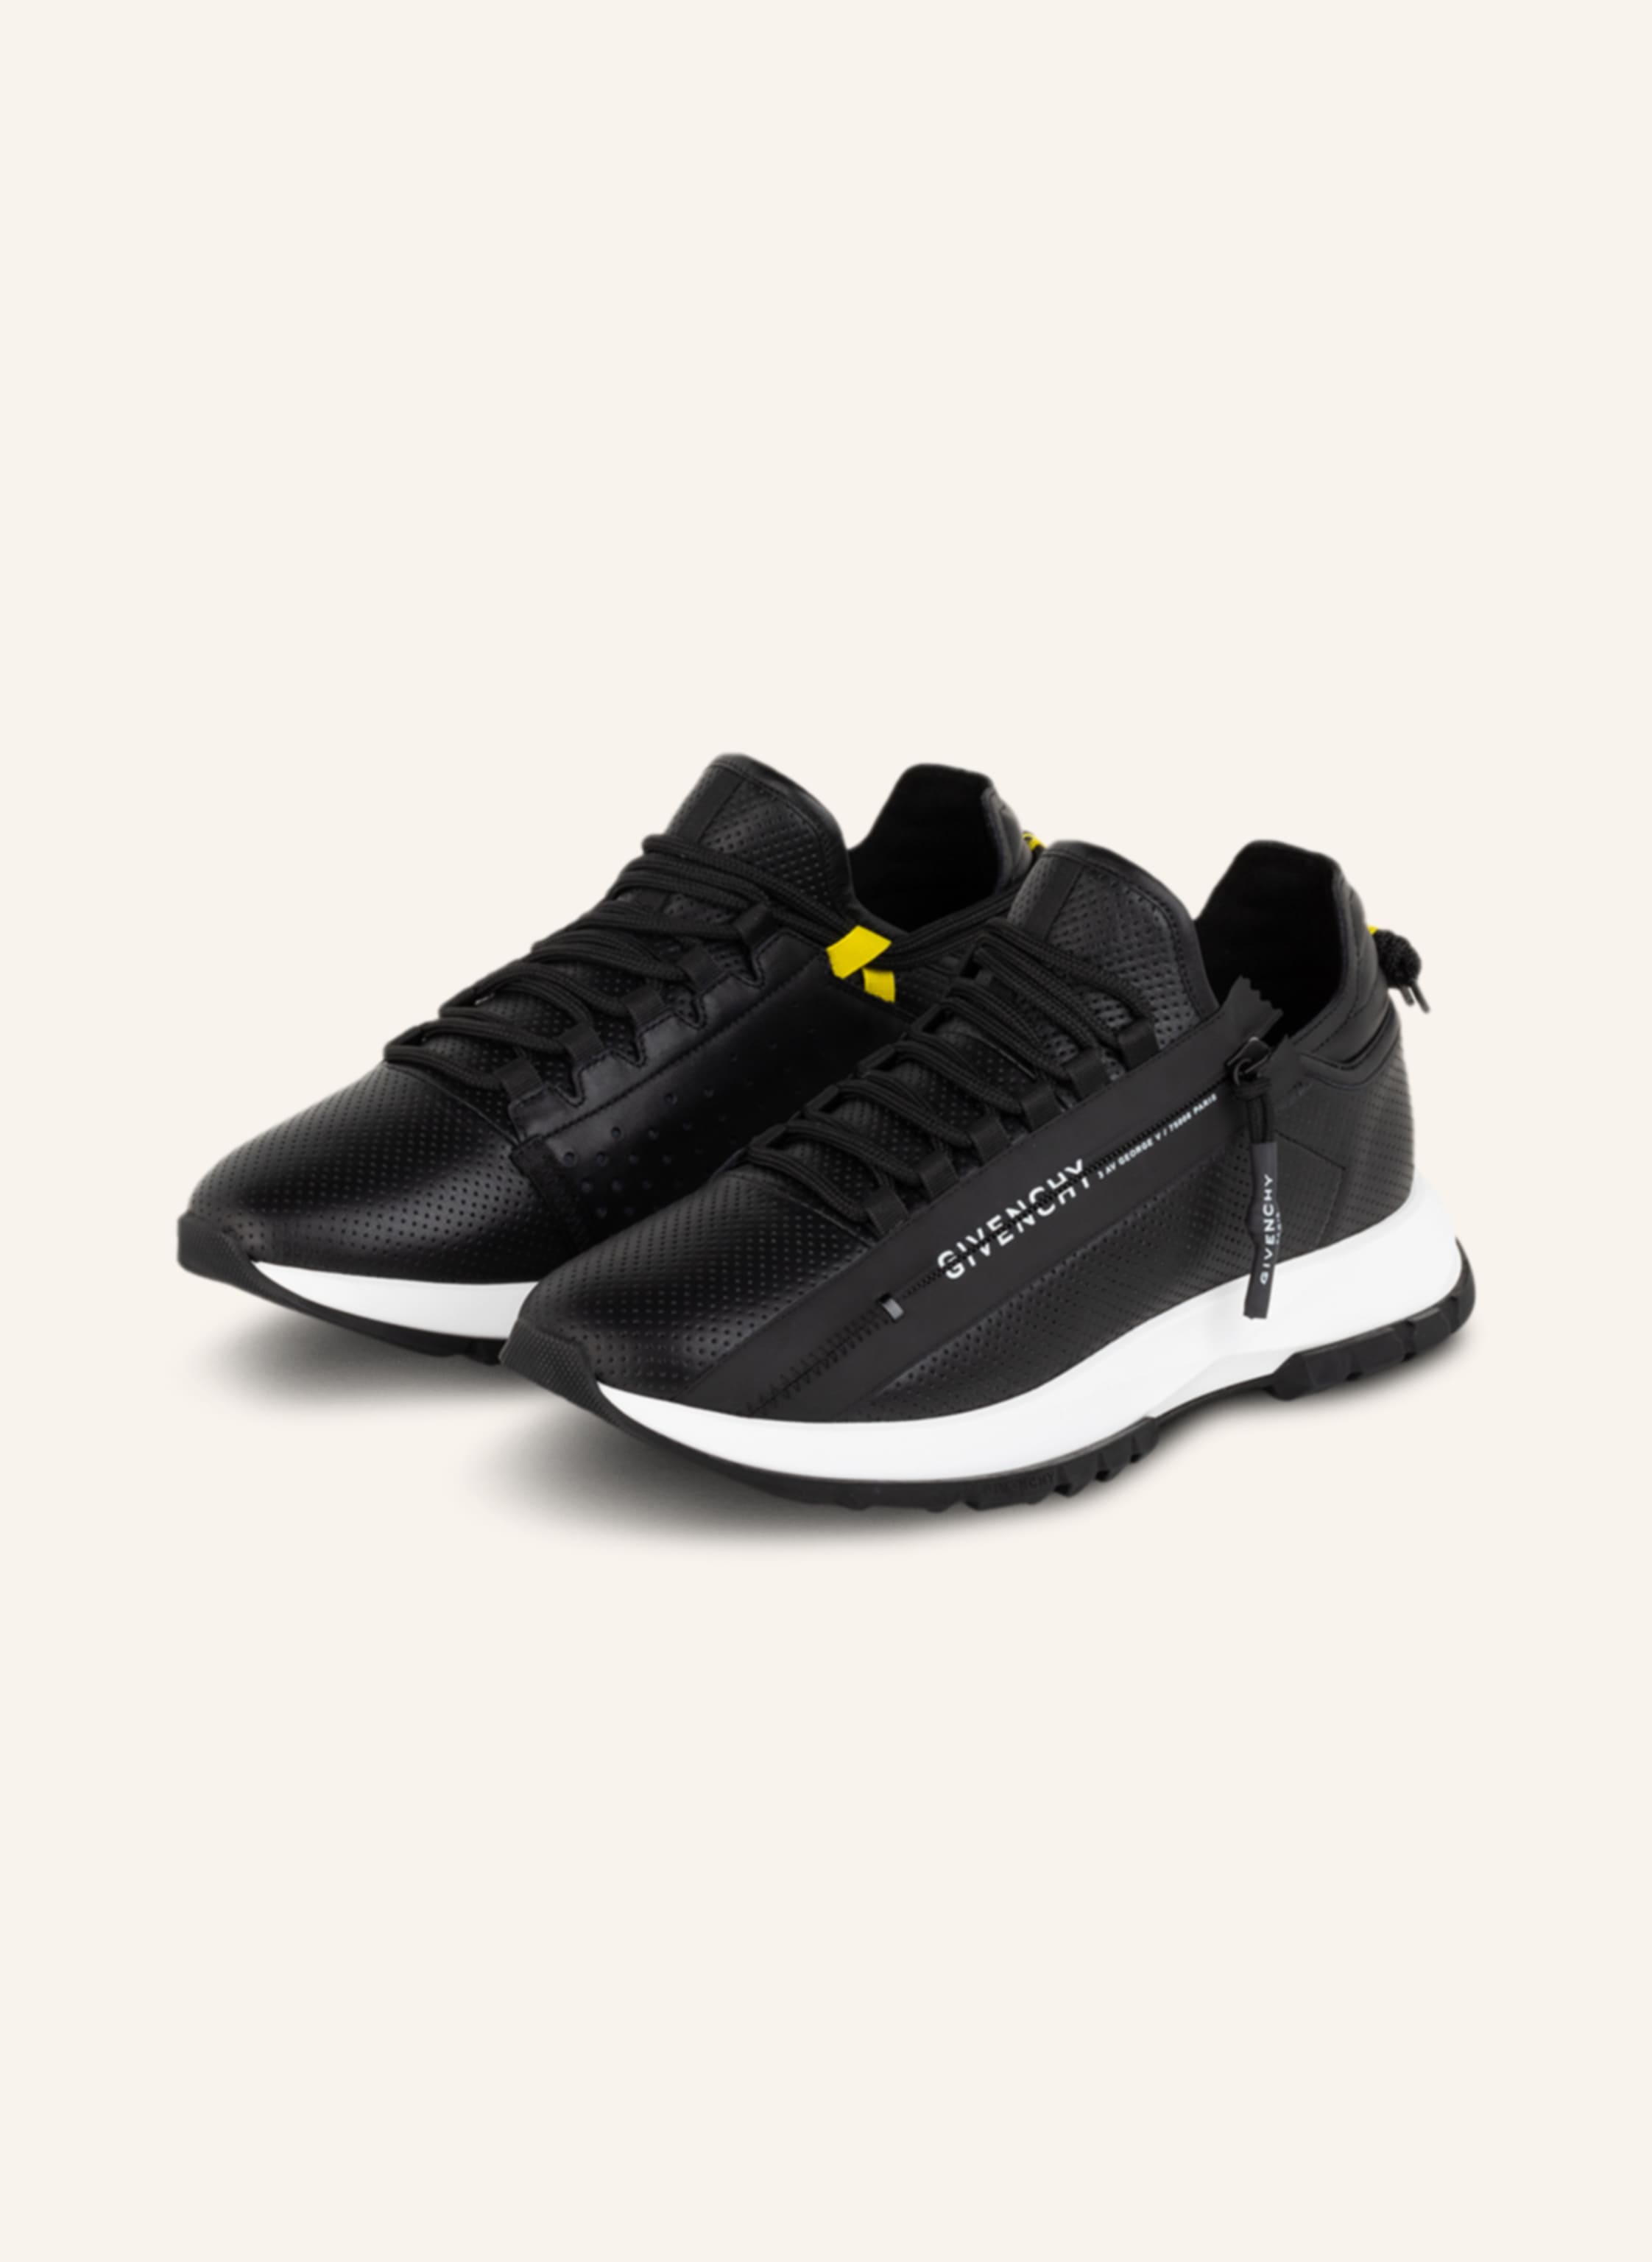 GIVENCHY Sneakers SPECTRE RUNNER in black | Breuninger